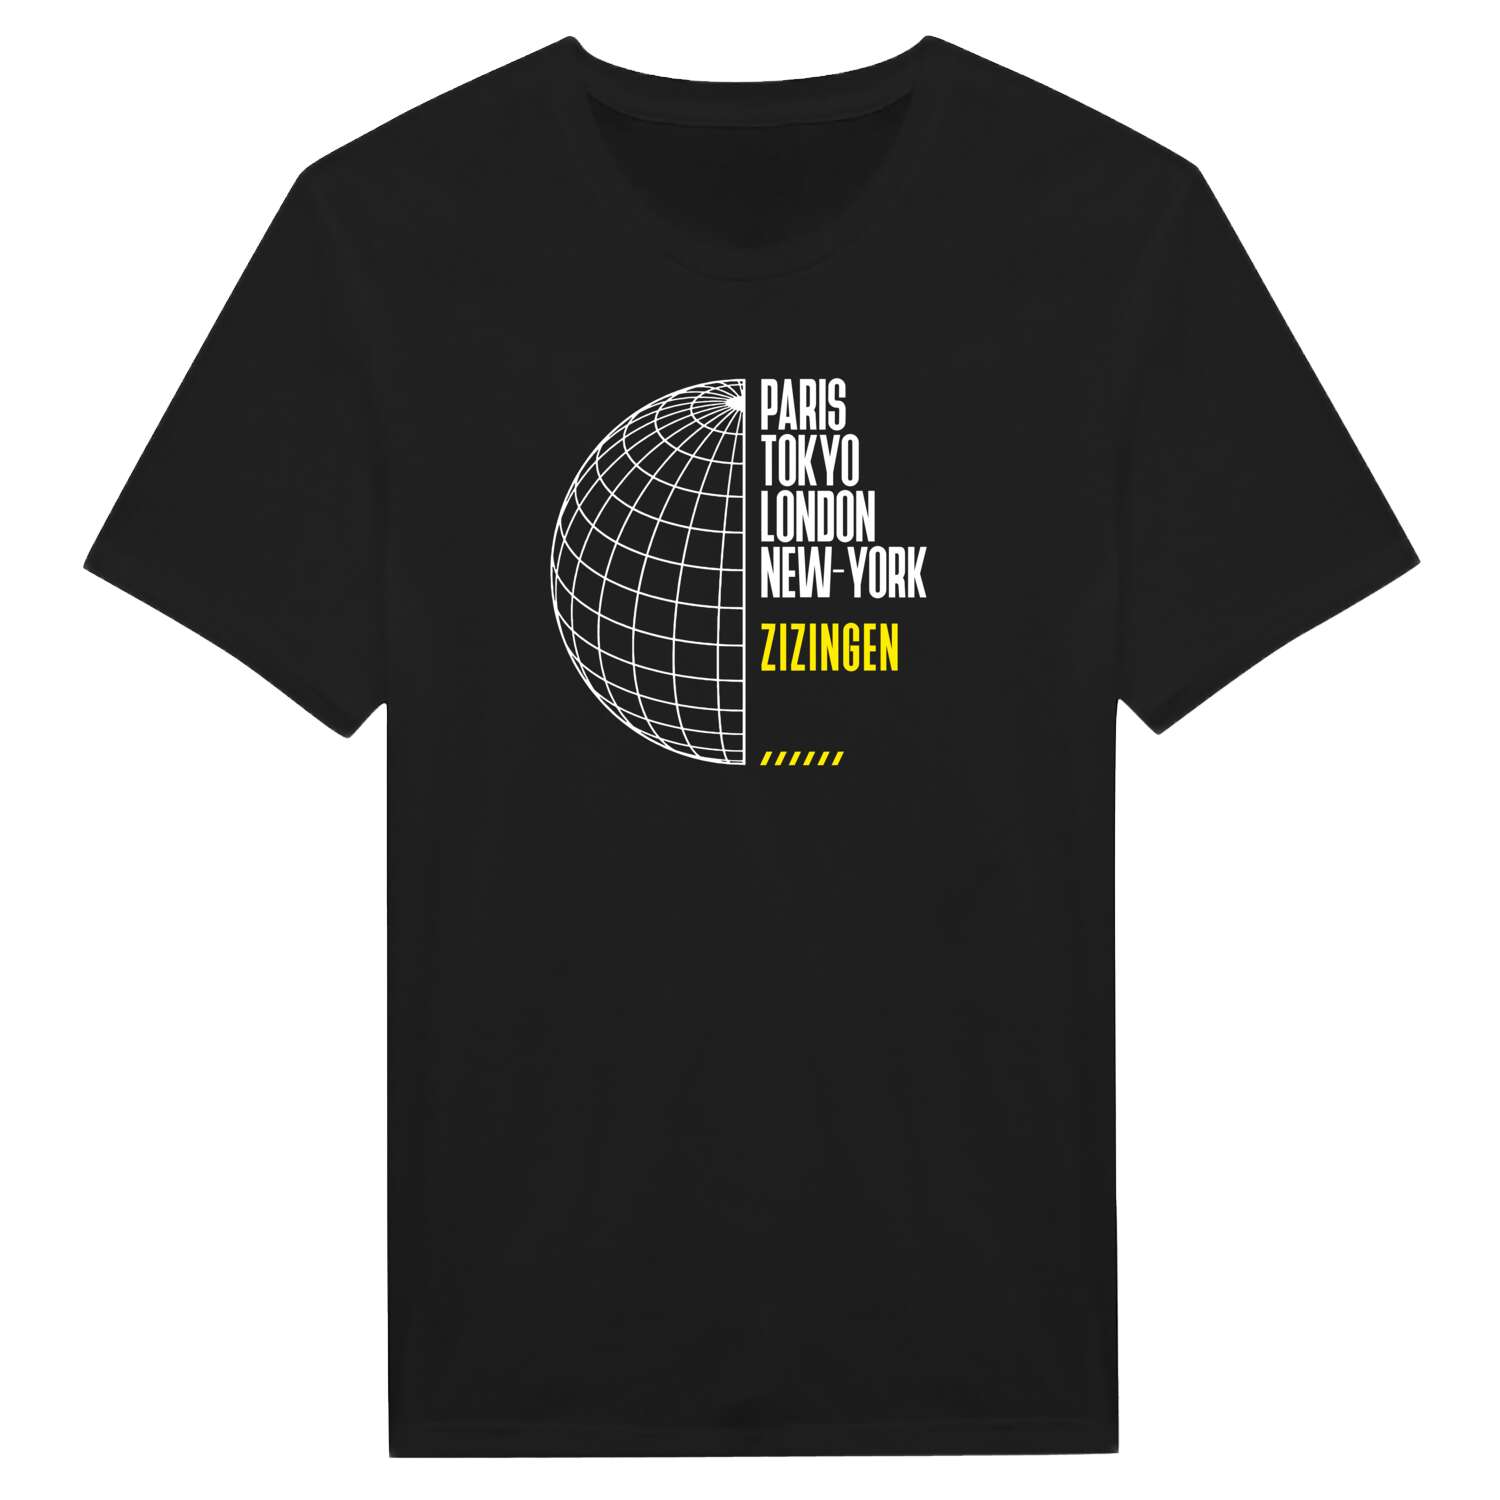 Zizingen T-Shirt »Paris Tokyo London«